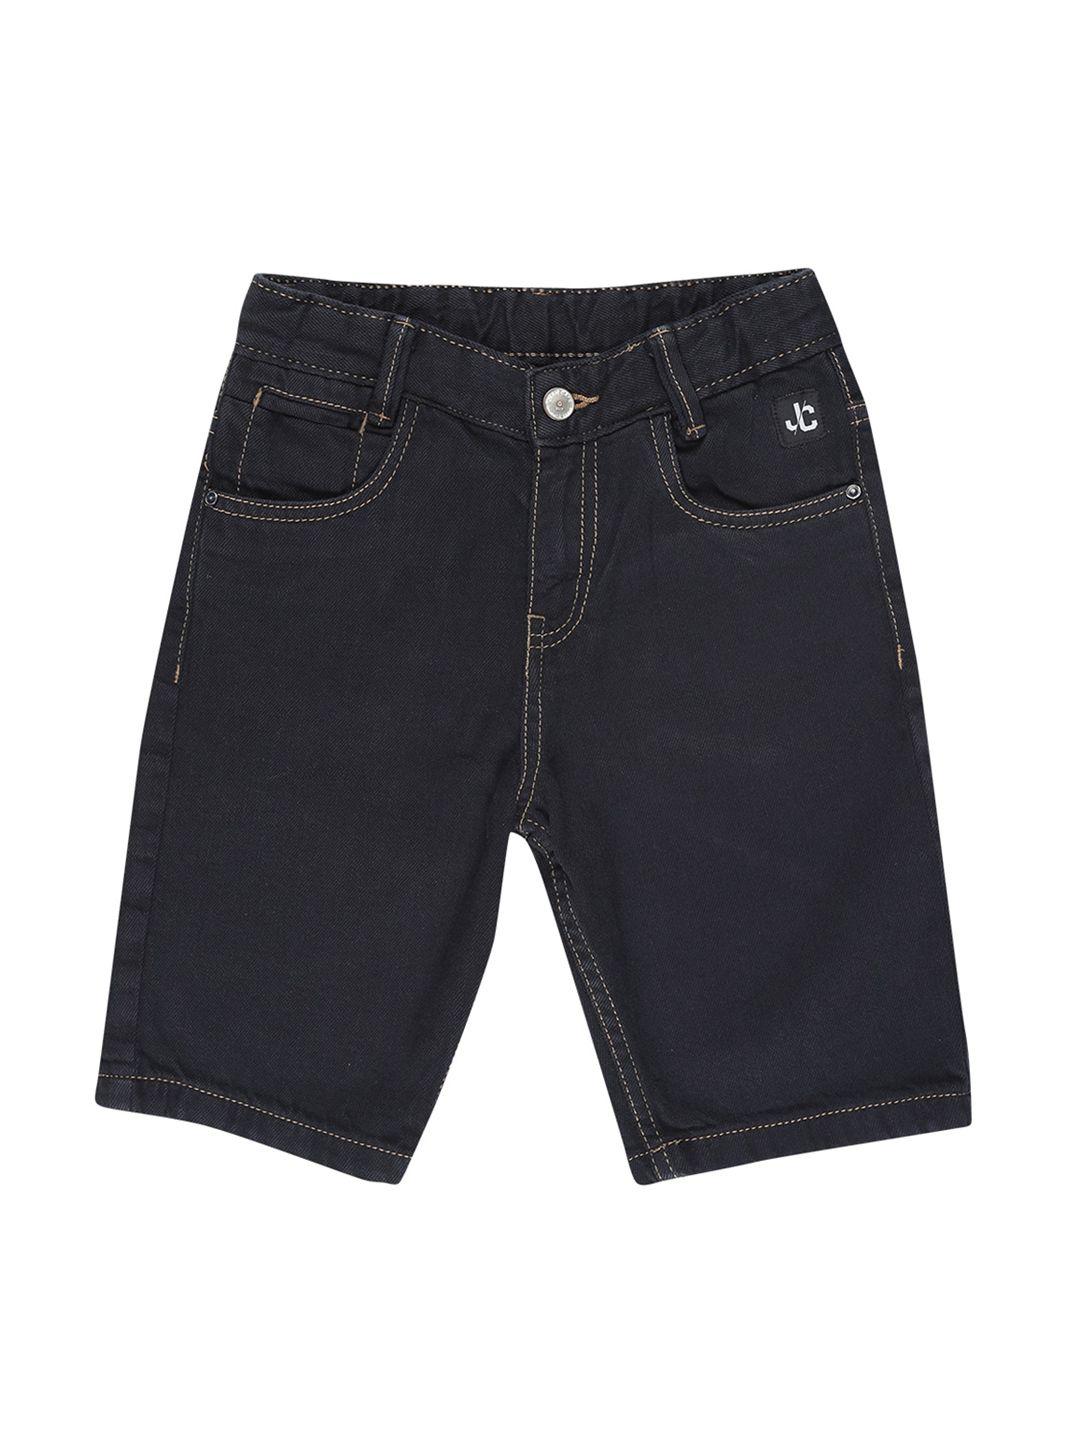 jean cafe boys navy blue slim fit denim shorts